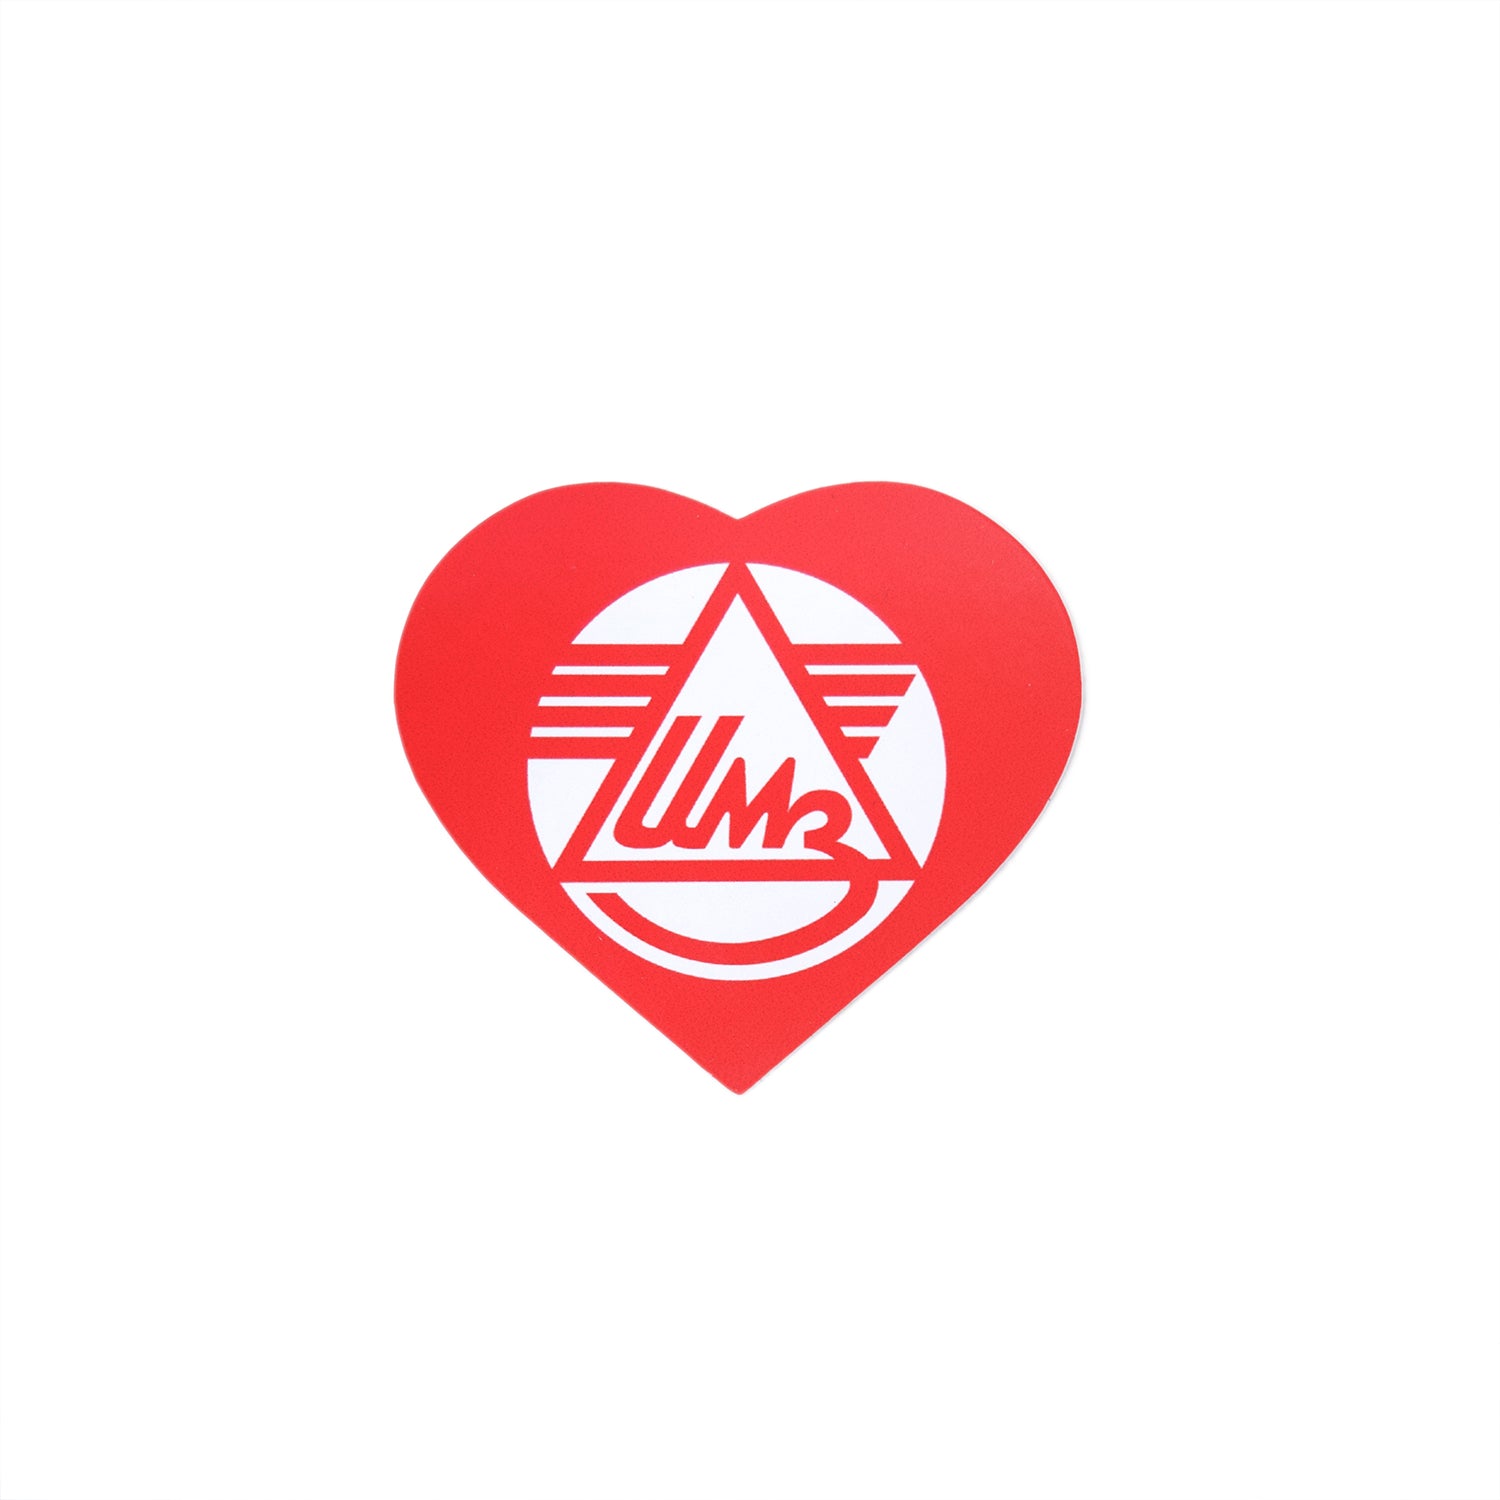 Red Heart IMZ Logo Decal